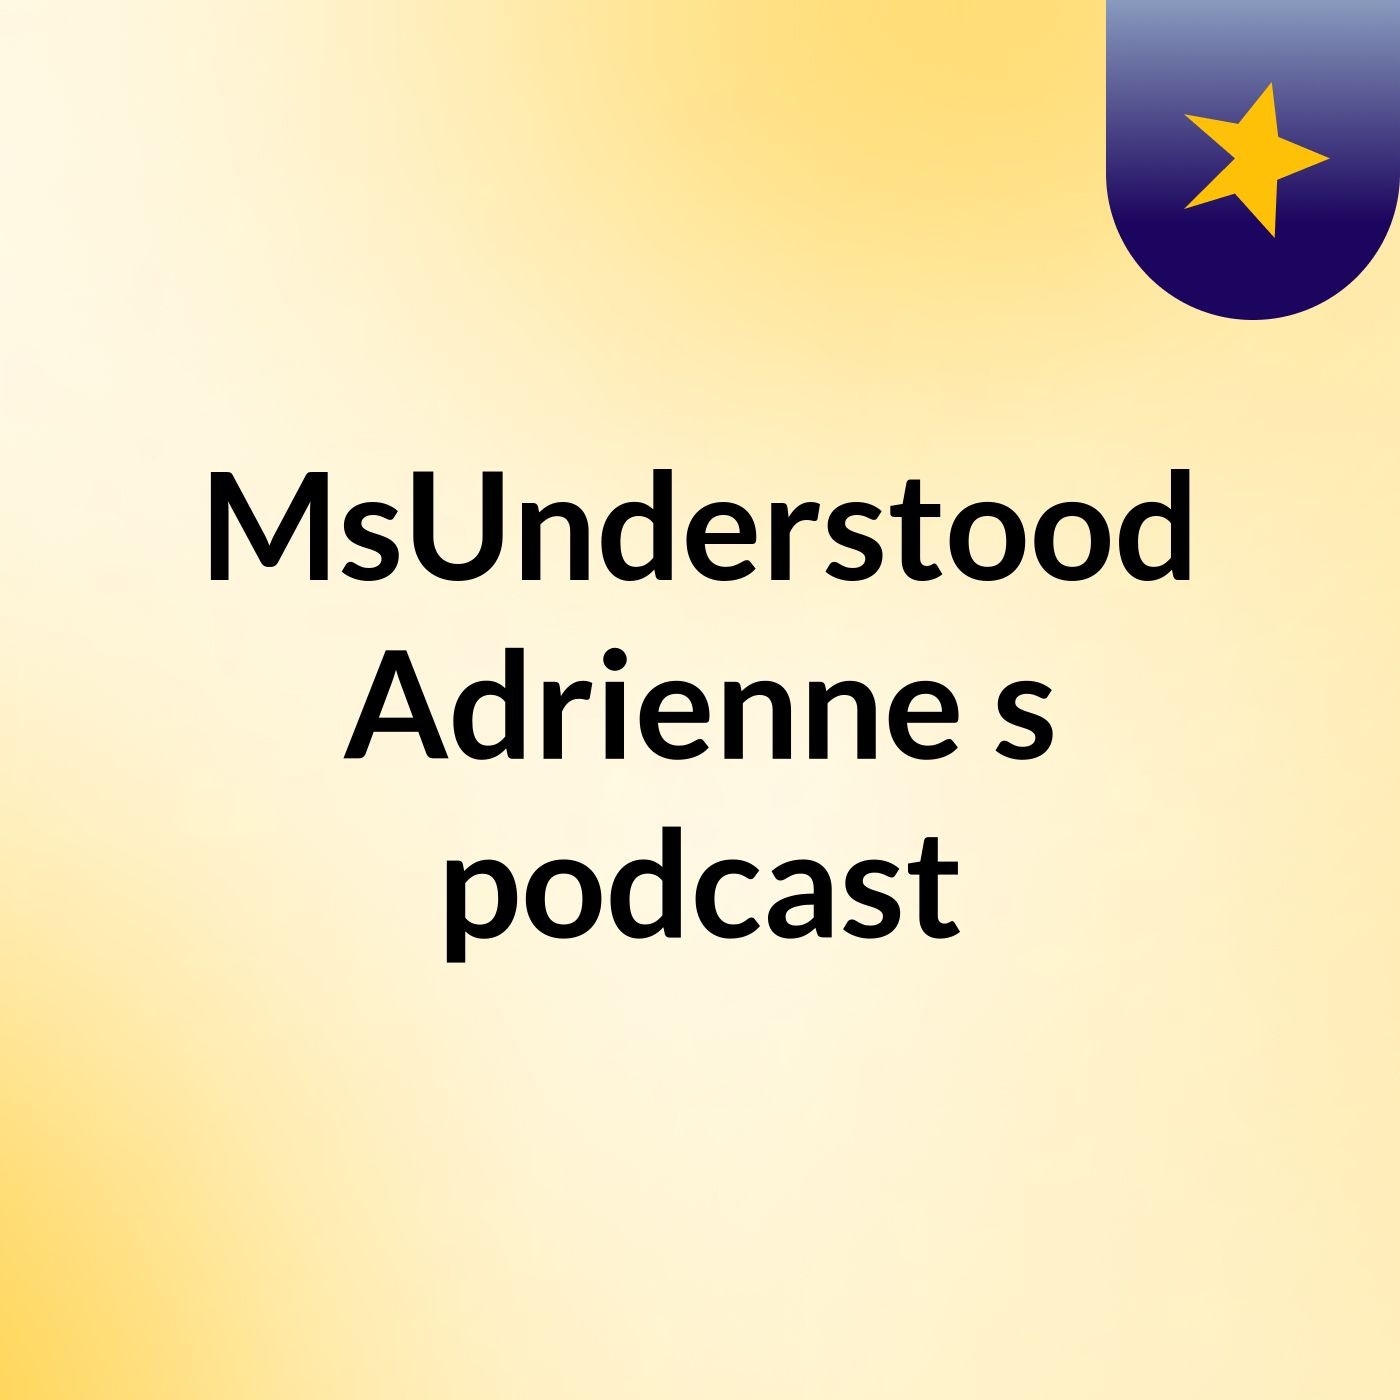 MsUnderstood Adrienne's podcast